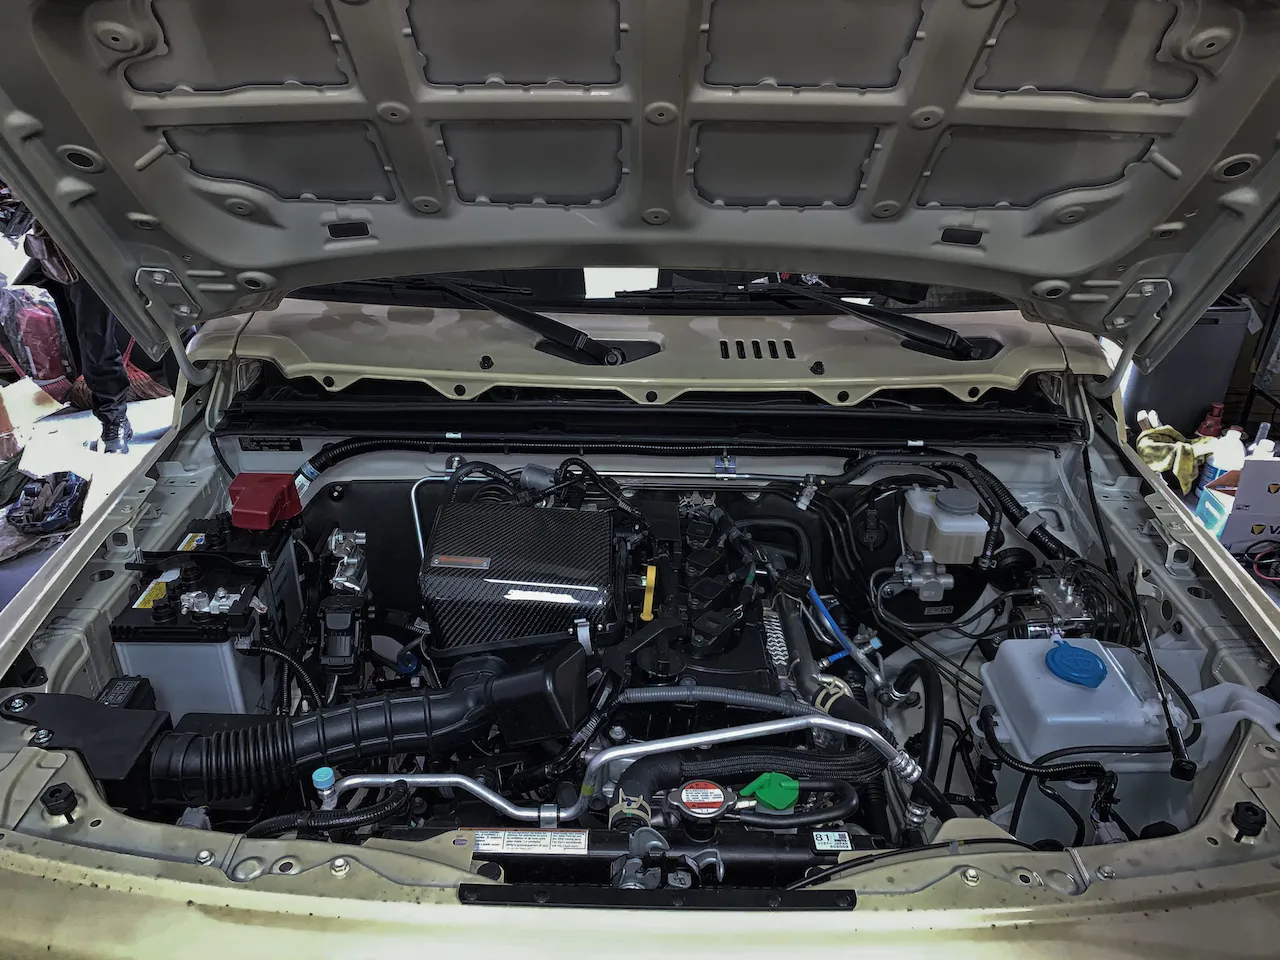 ARMASPEED Carbon Ansaugsystem für Suzuki Jimny MK4